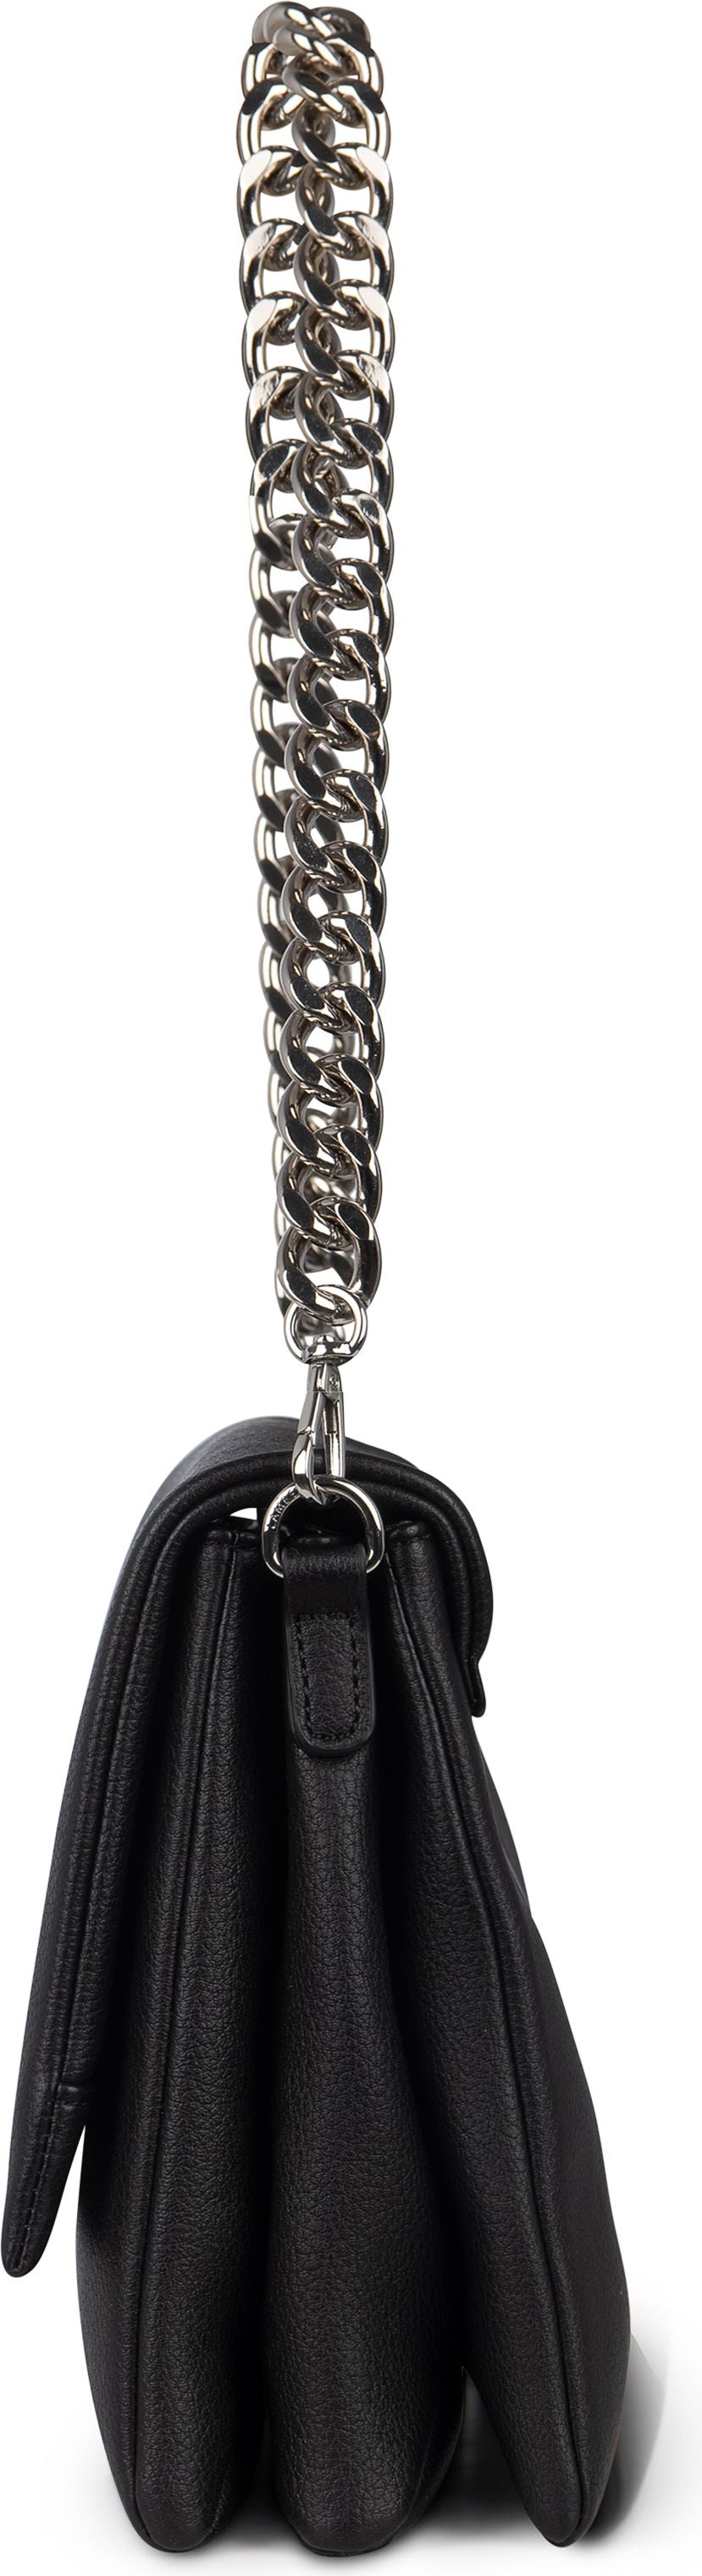 Lambert Accessories 3 In 1 Crossbody Shoulder Bag Black Pebble